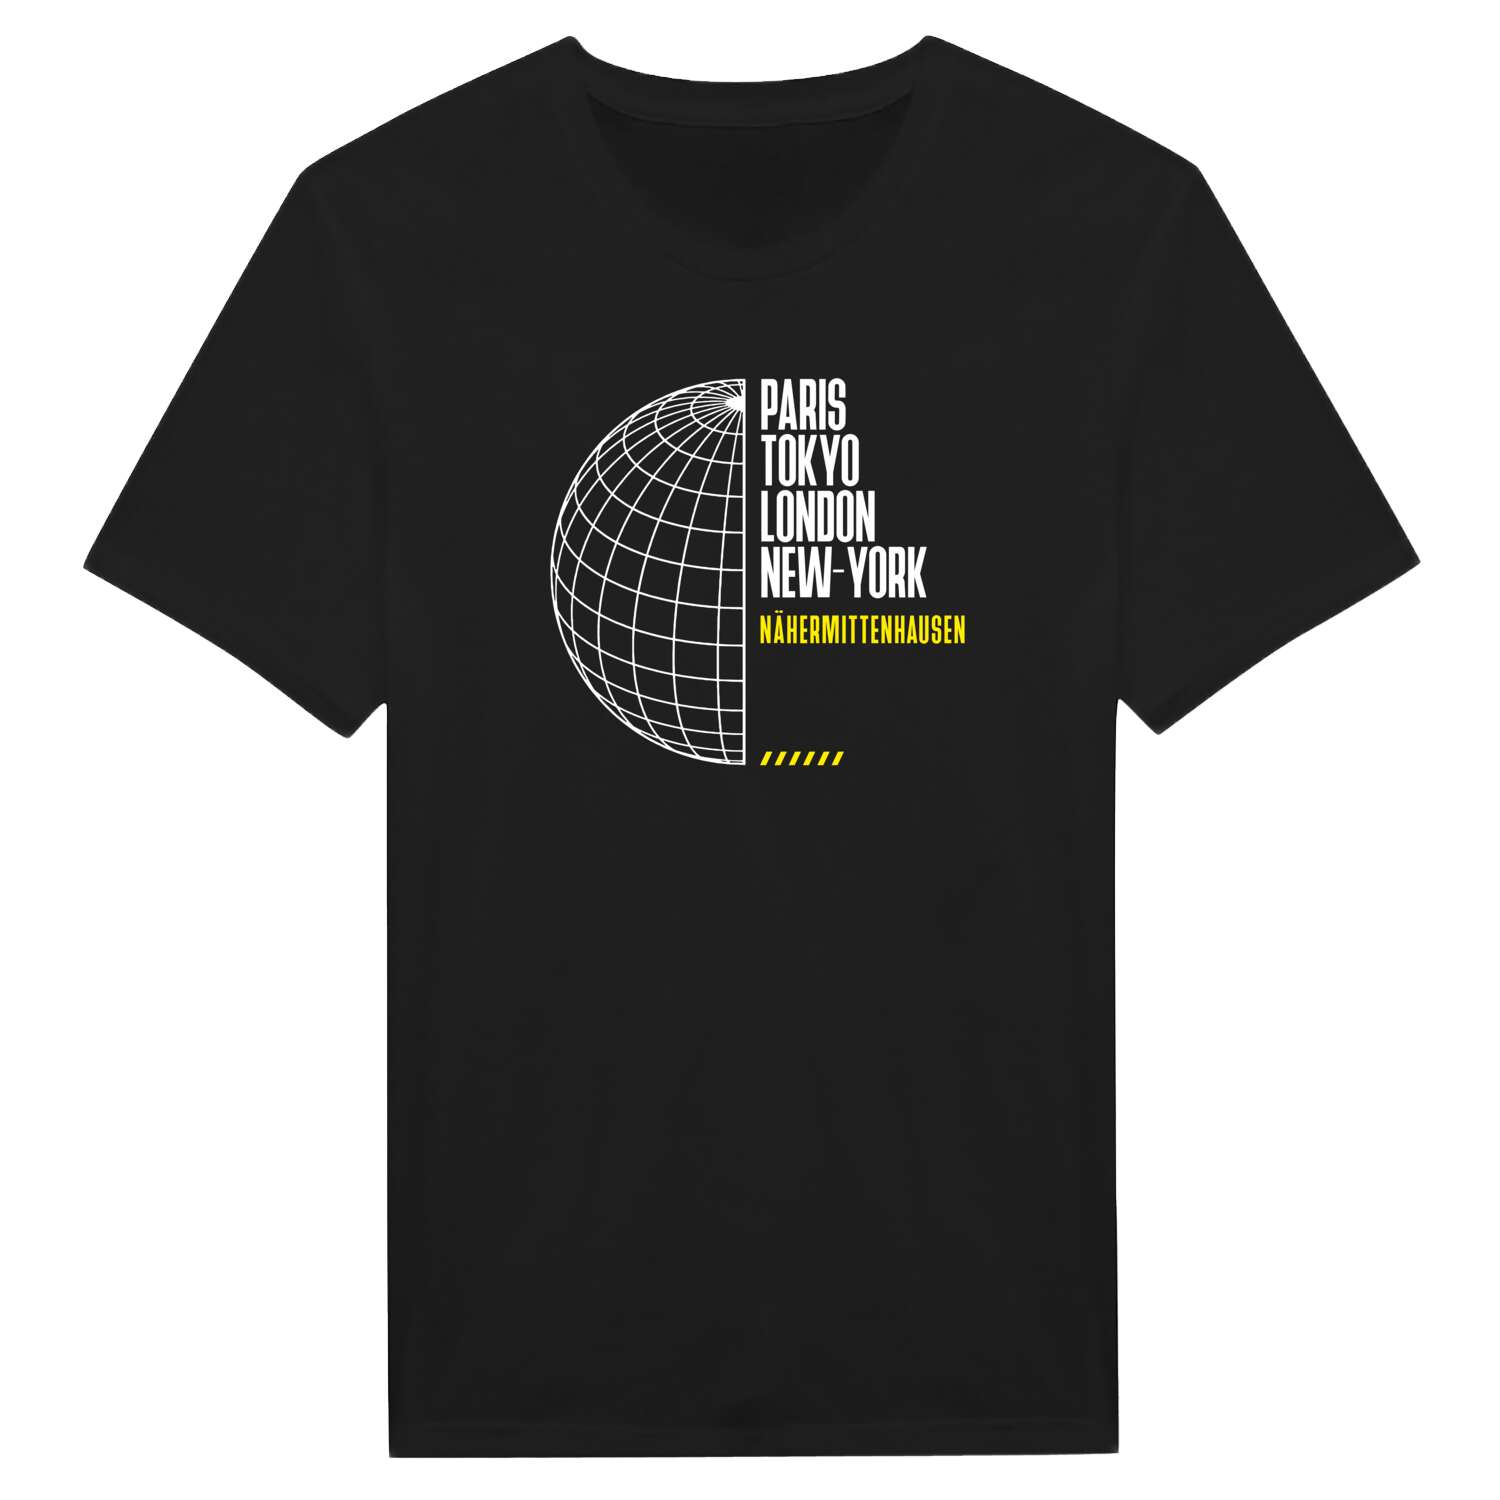 Nähermittenhausen T-Shirt »Paris Tokyo London«